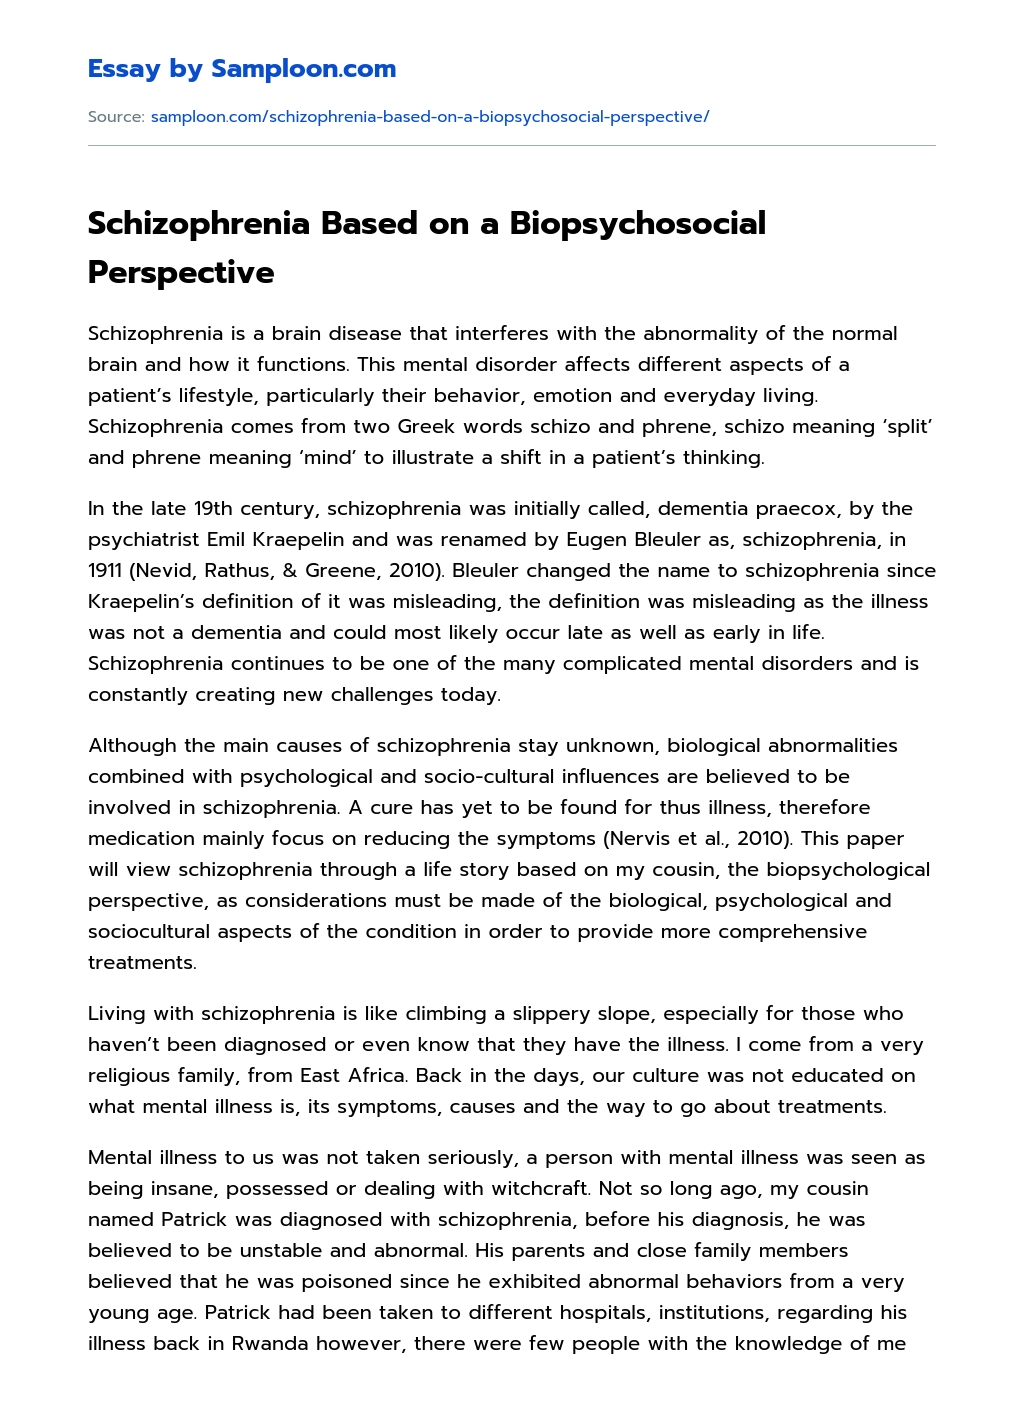 Schizophrenia Based on a Biopsychosocial Perspective Argumentative Essay essay